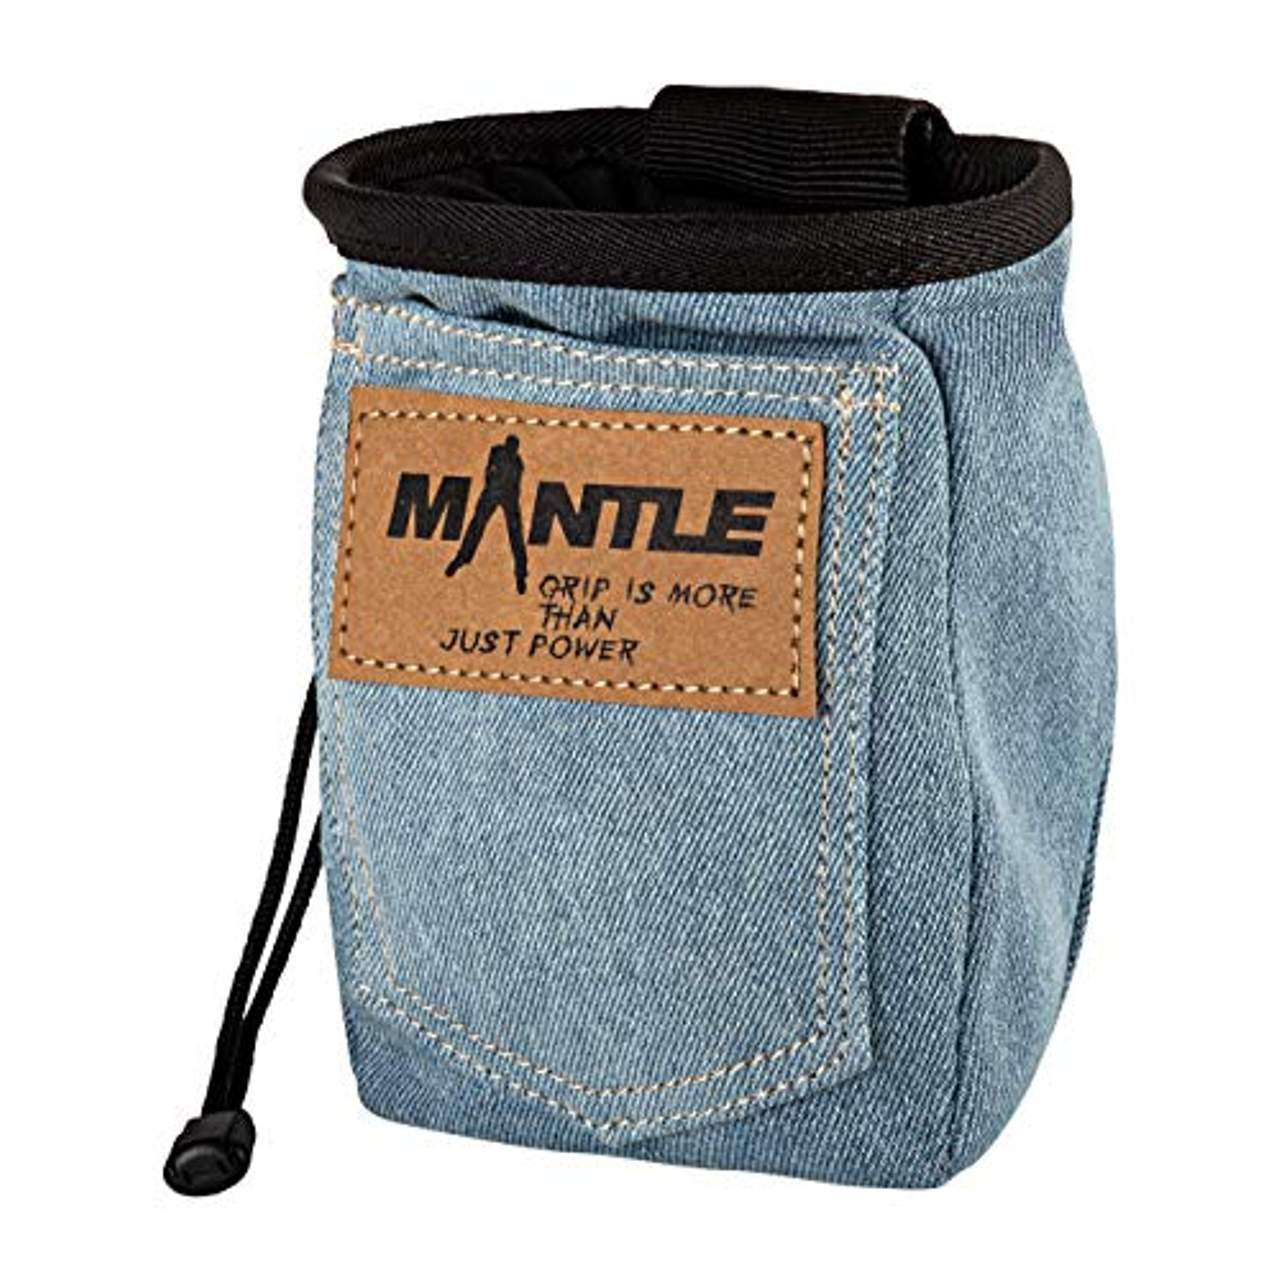 Mantle Chalkbag Kreidebeutel in Jeans hell